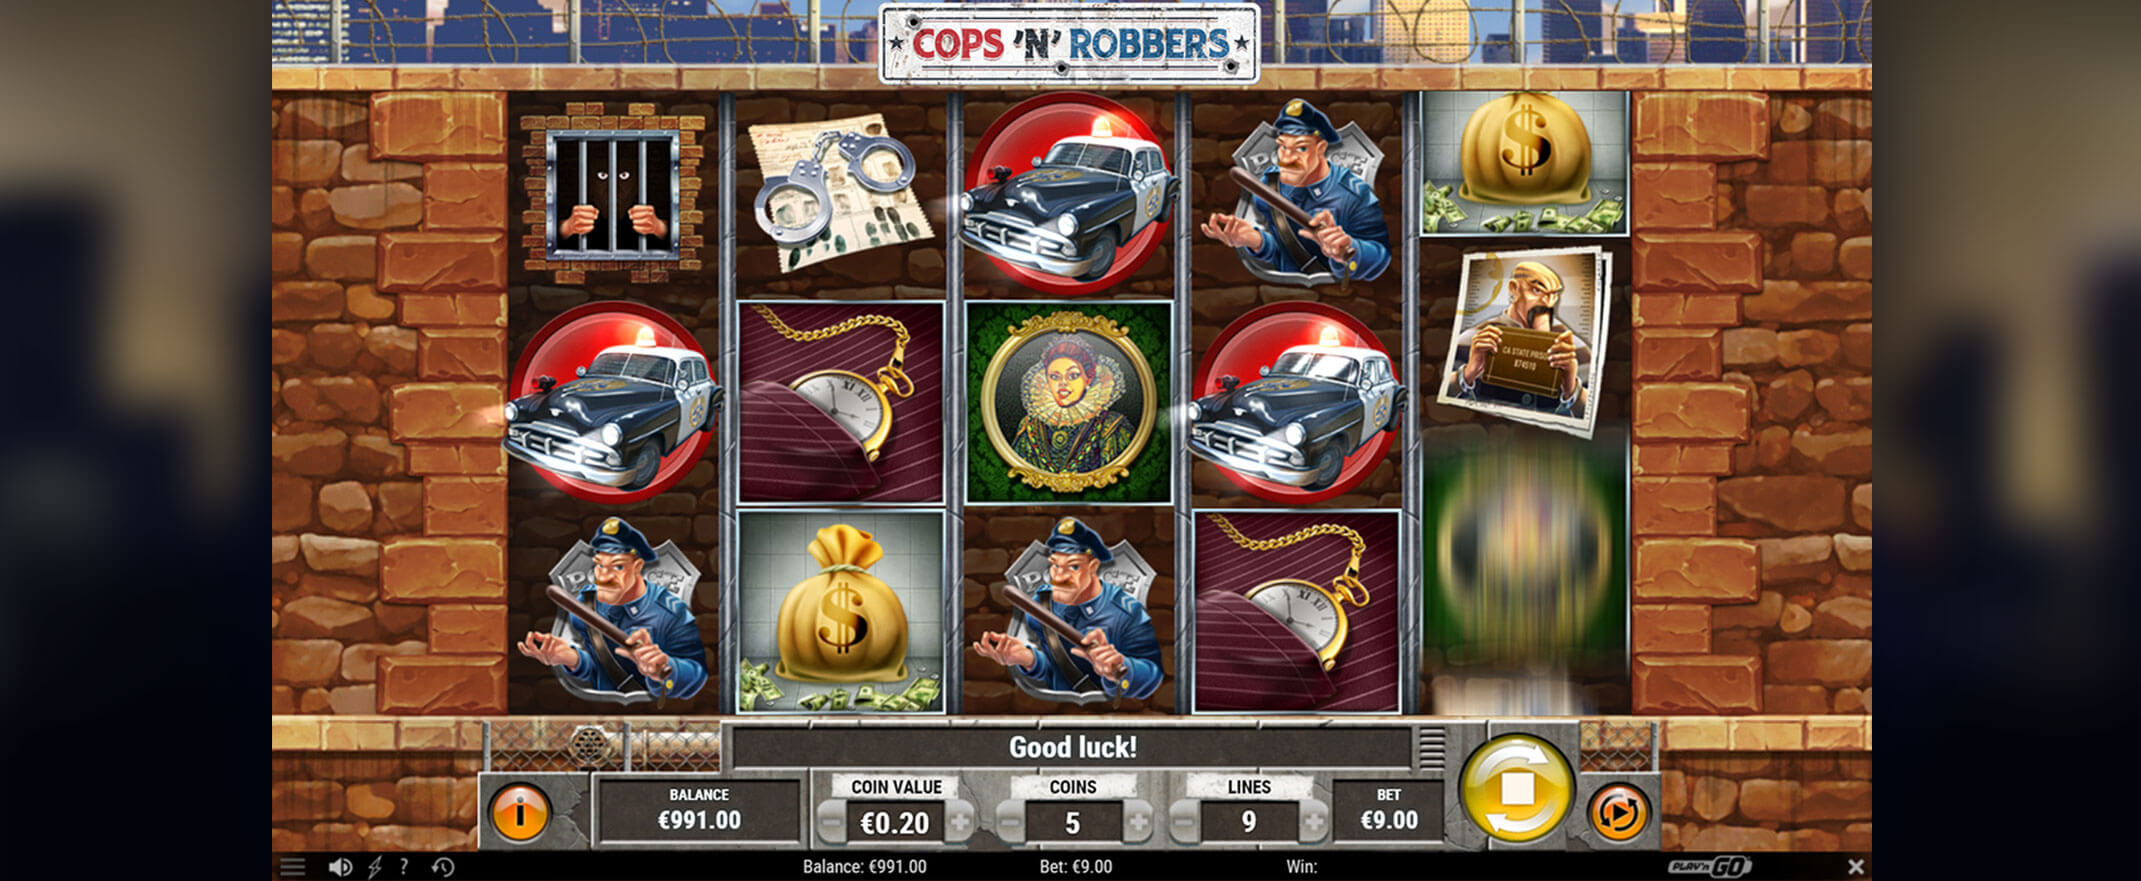 Cops'n'Robbers Spielautomat